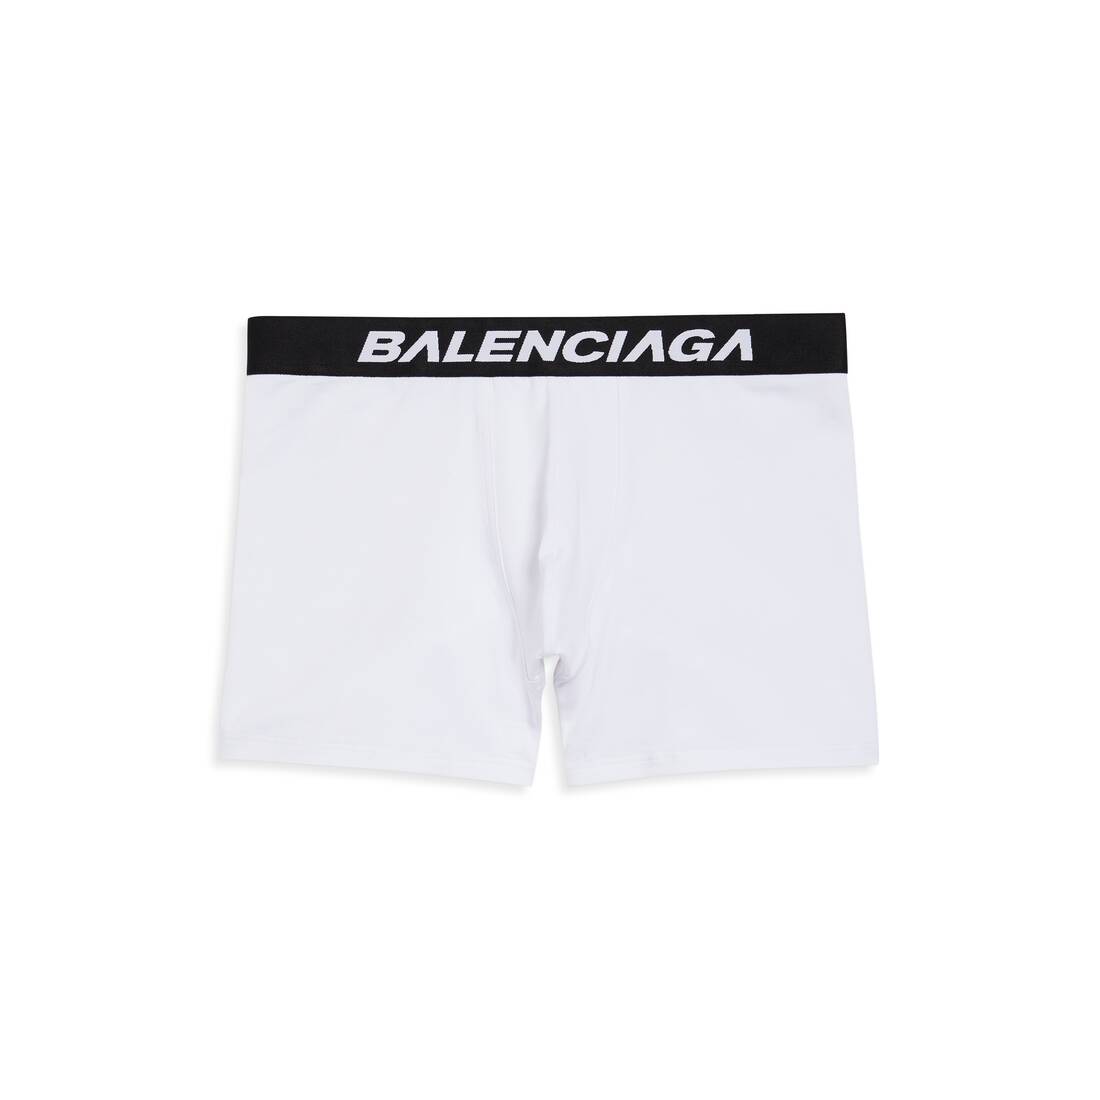 Balenciaga - Stretch Cotton-jersey Briefs - Black